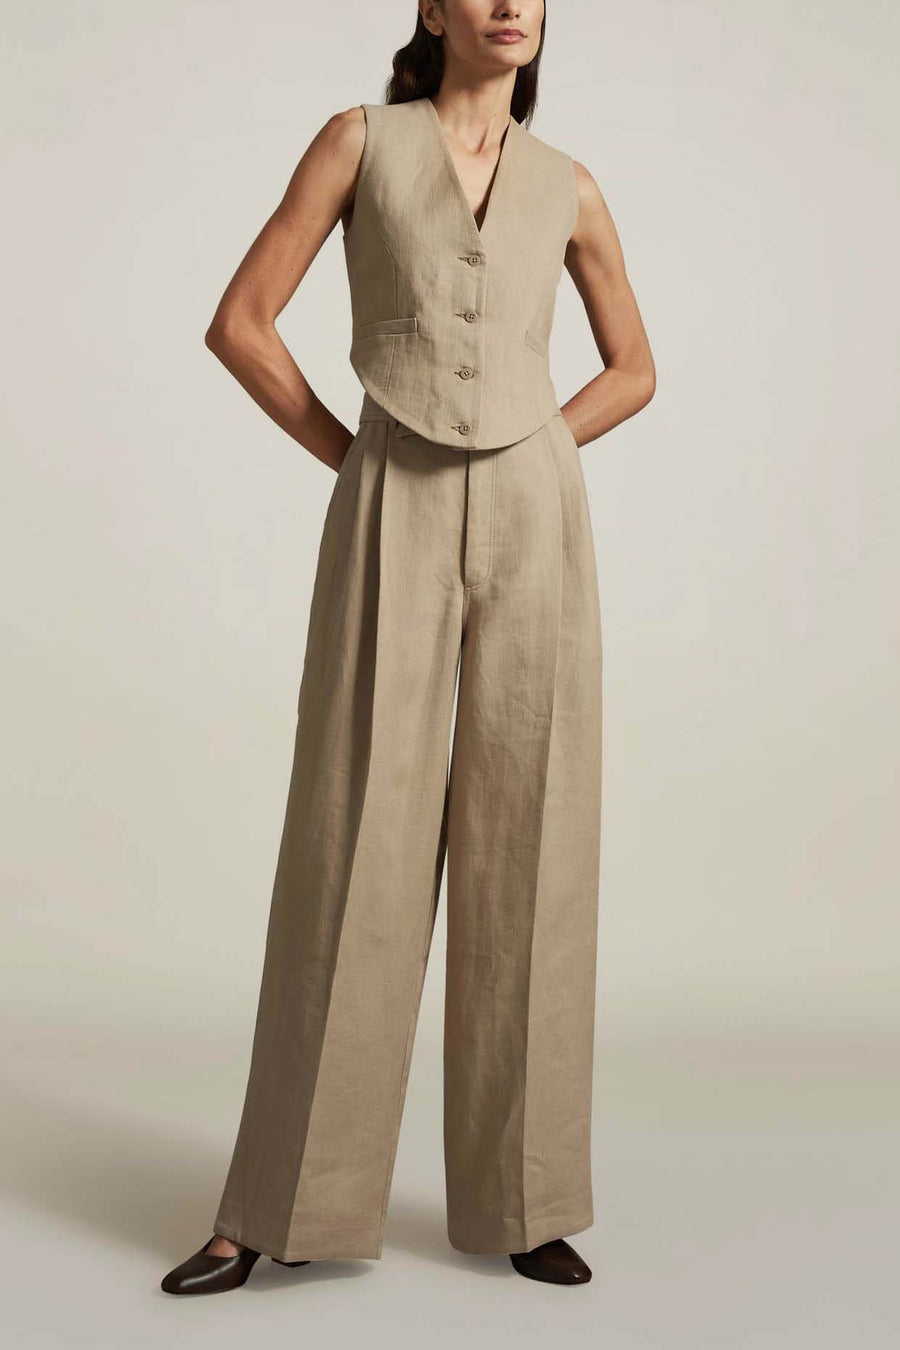 Bodice Suit Vest in Khaki Deadstock Linen